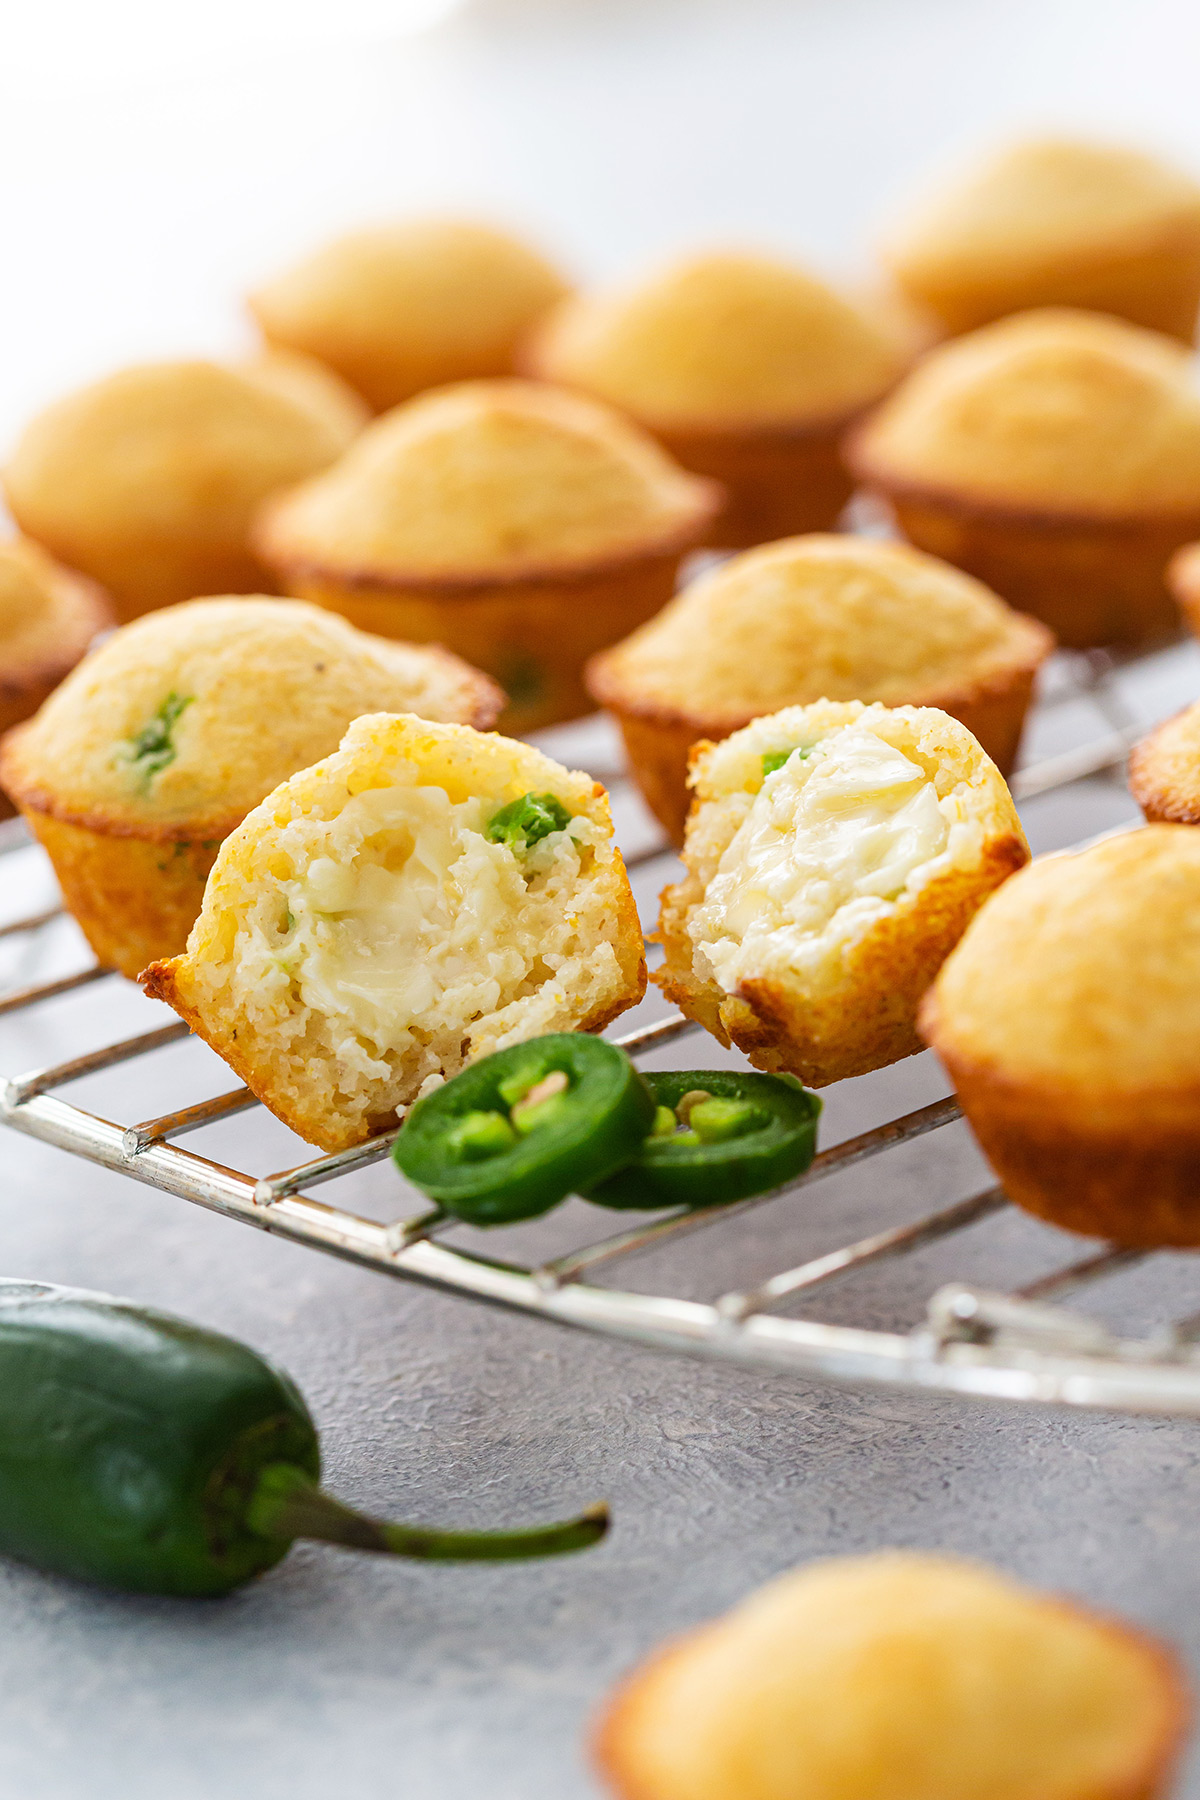 Mini Jalapeno Cornbread Muffins